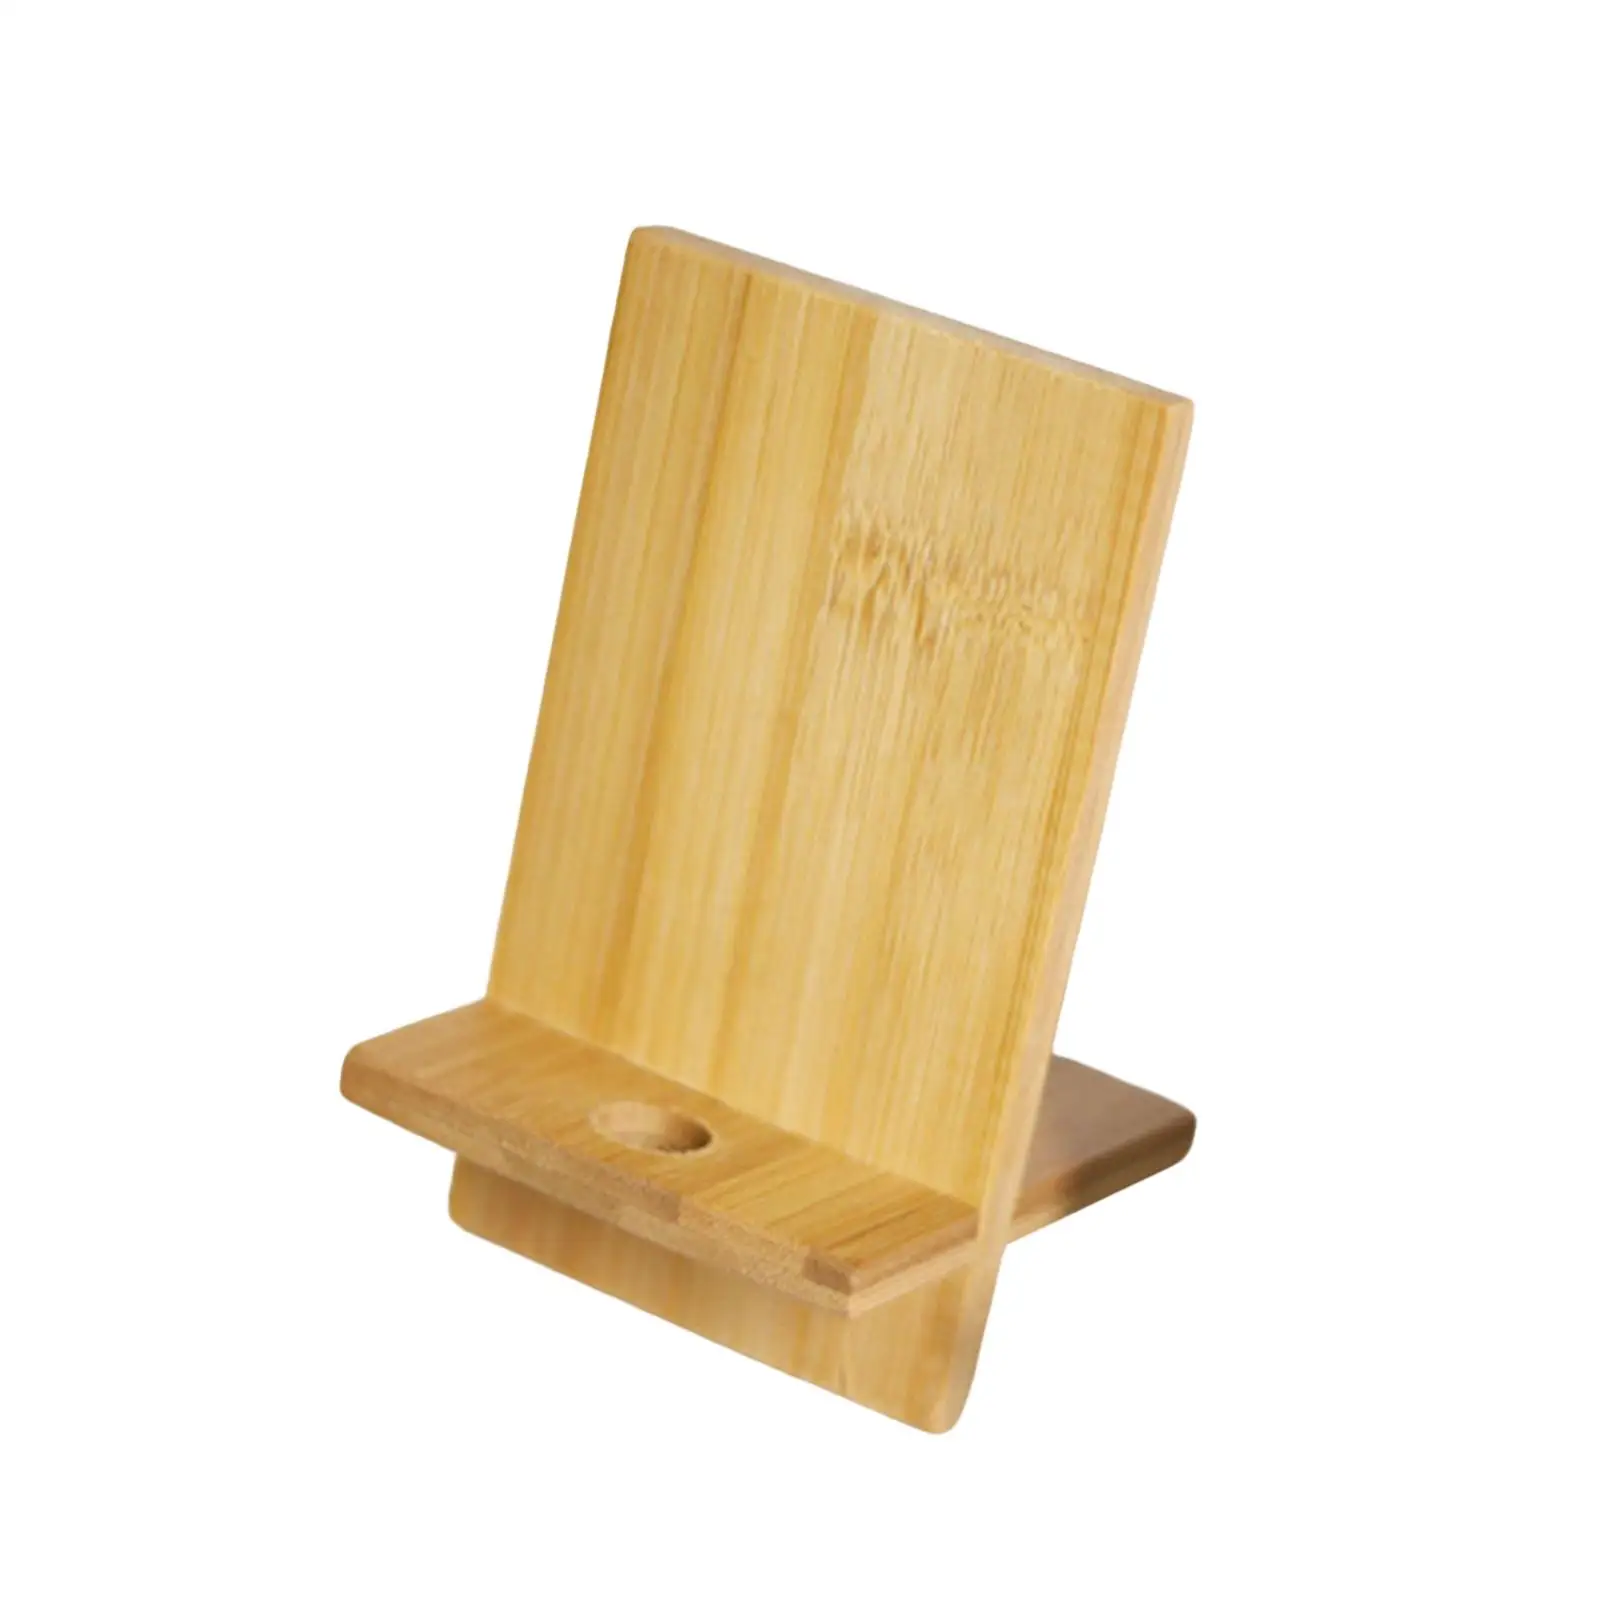 Detachable bamboo Phone Holder Tablet Stand Desk Dock Cradle for Bedroom Travel Fine Craftsmanship Accessory Durable